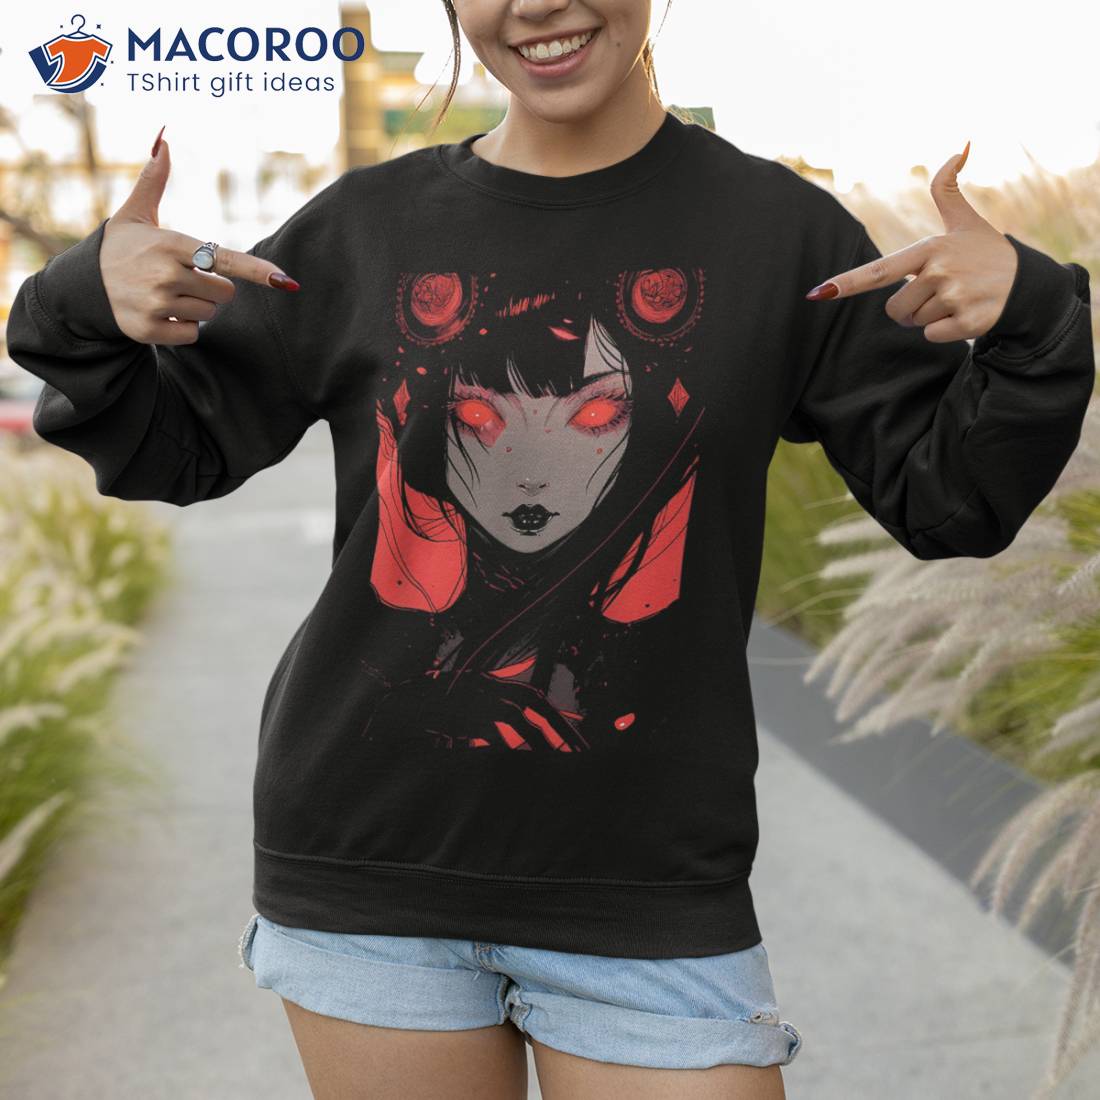 Women Teens Goth T-shirt Fashion Gothic Anime Aesthetic Print